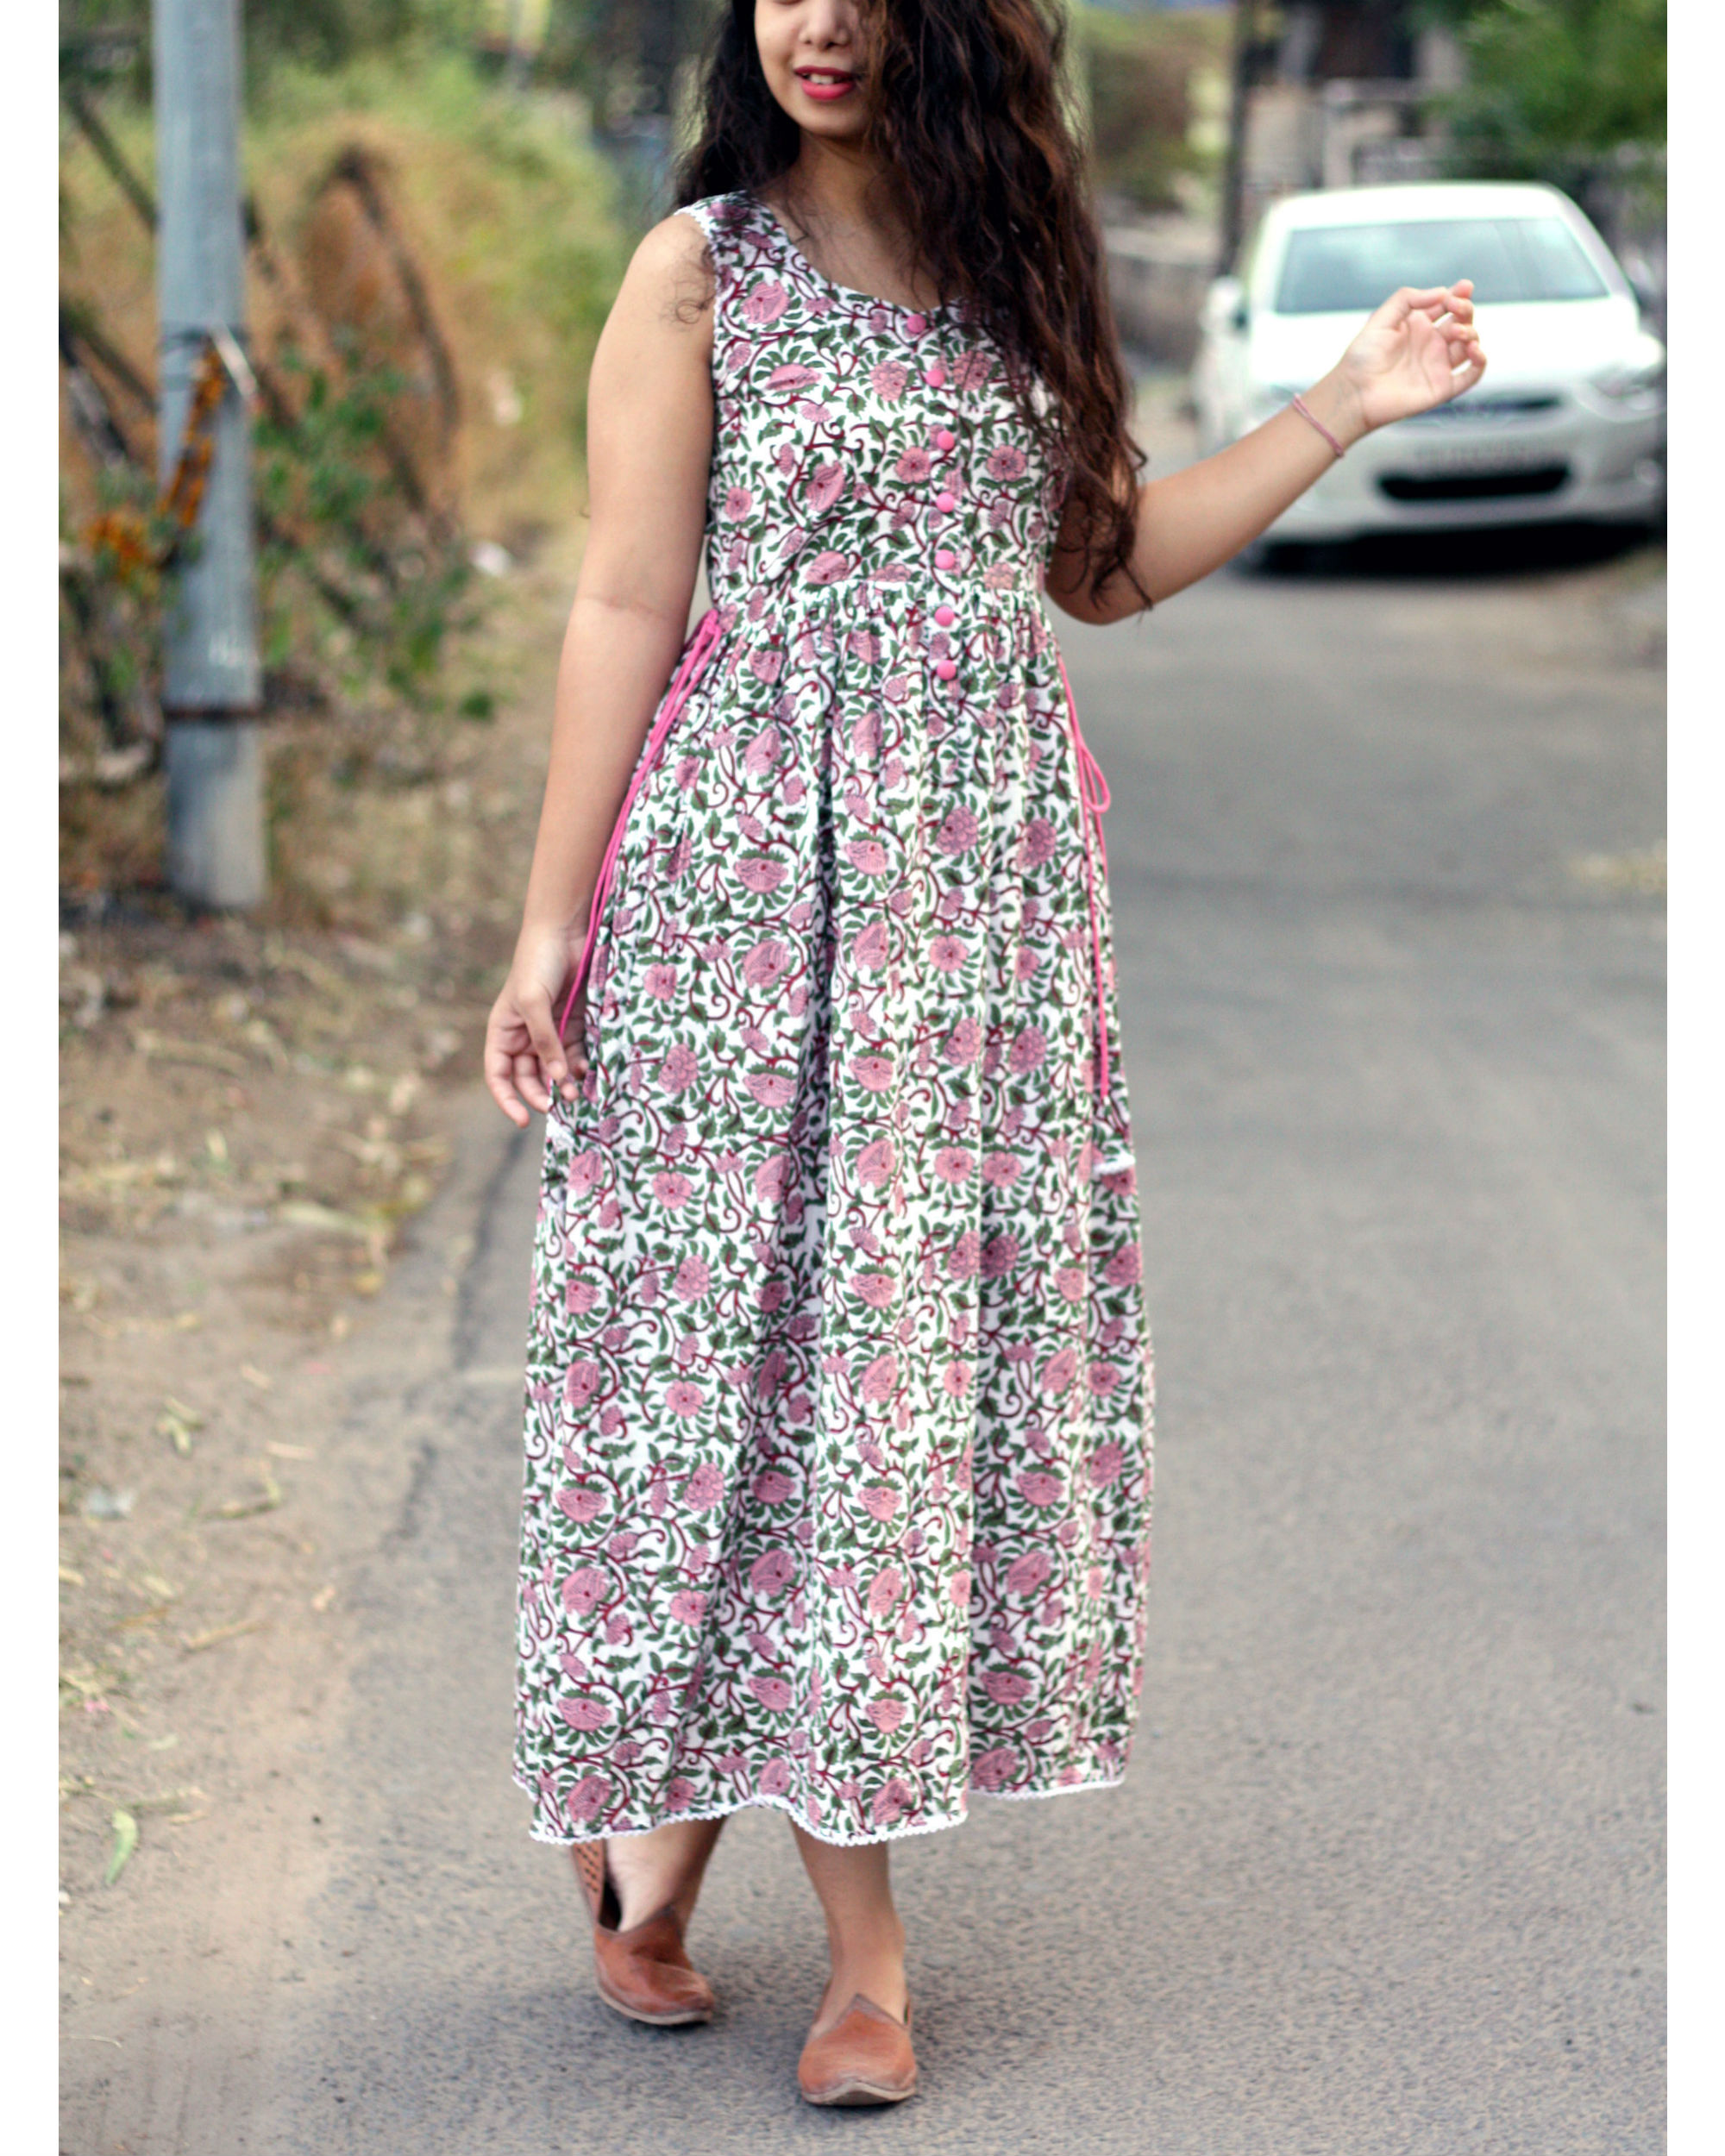 Floral ankle length maxi dress by Label Shivani Vyas | The Secret Label